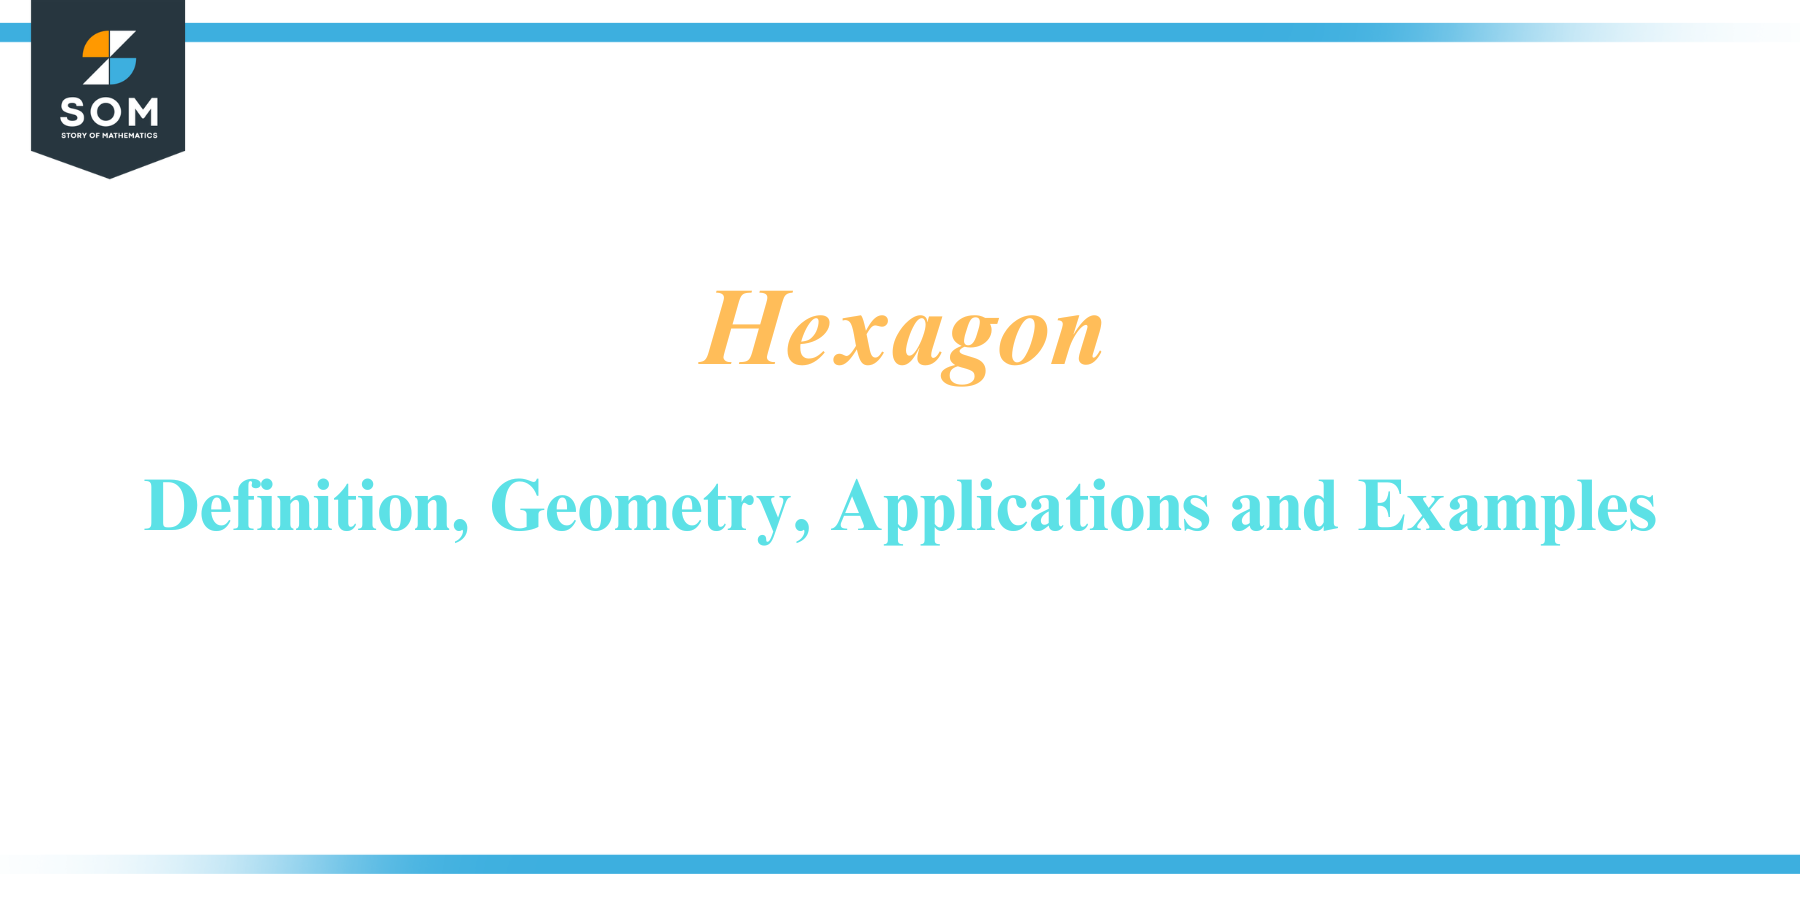 Hexagon definition geometry applications